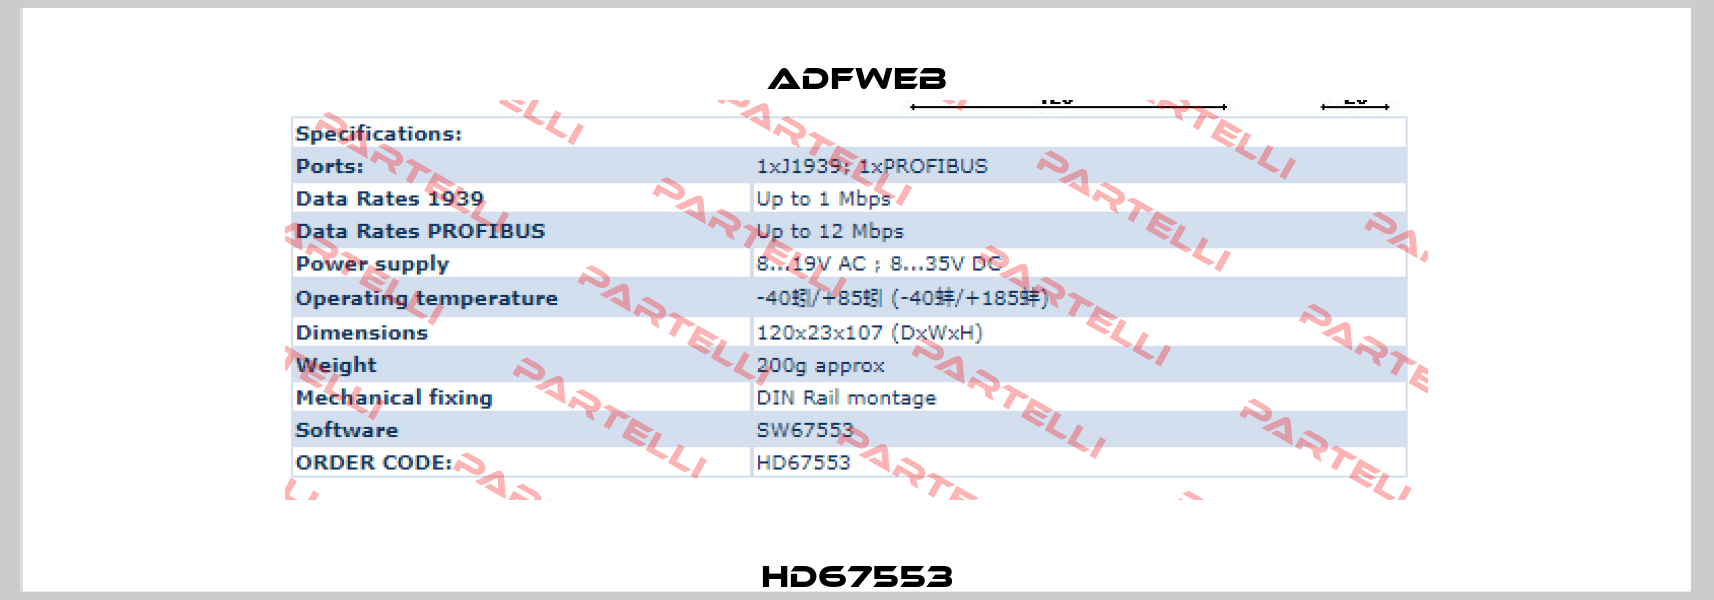 HD67553 ADFweb